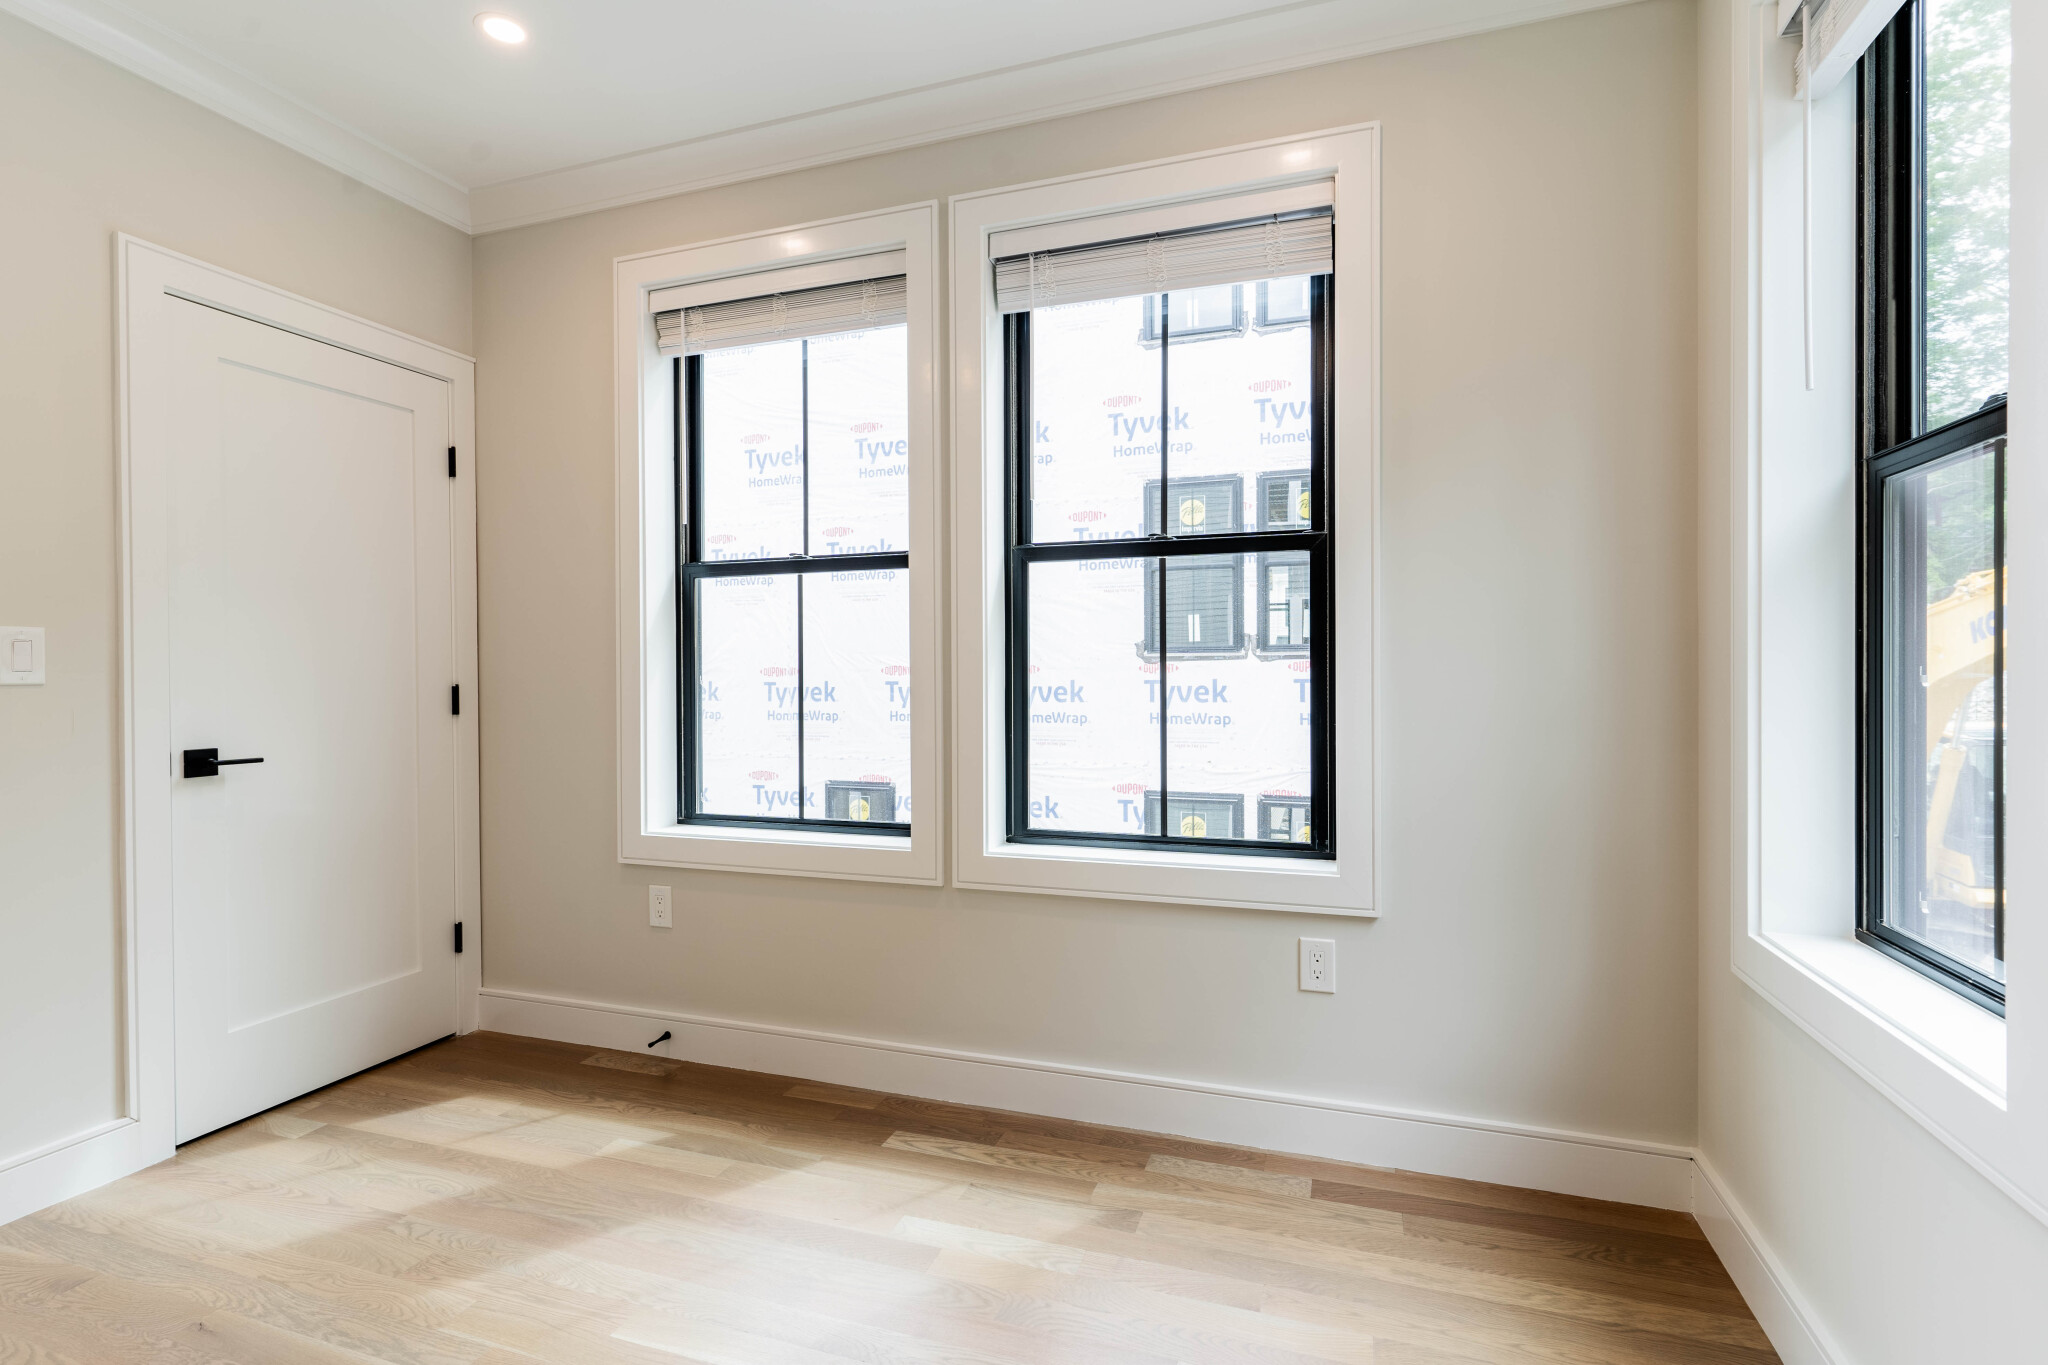 Photos of apartment on Lamartine St.,Boston MA 02130